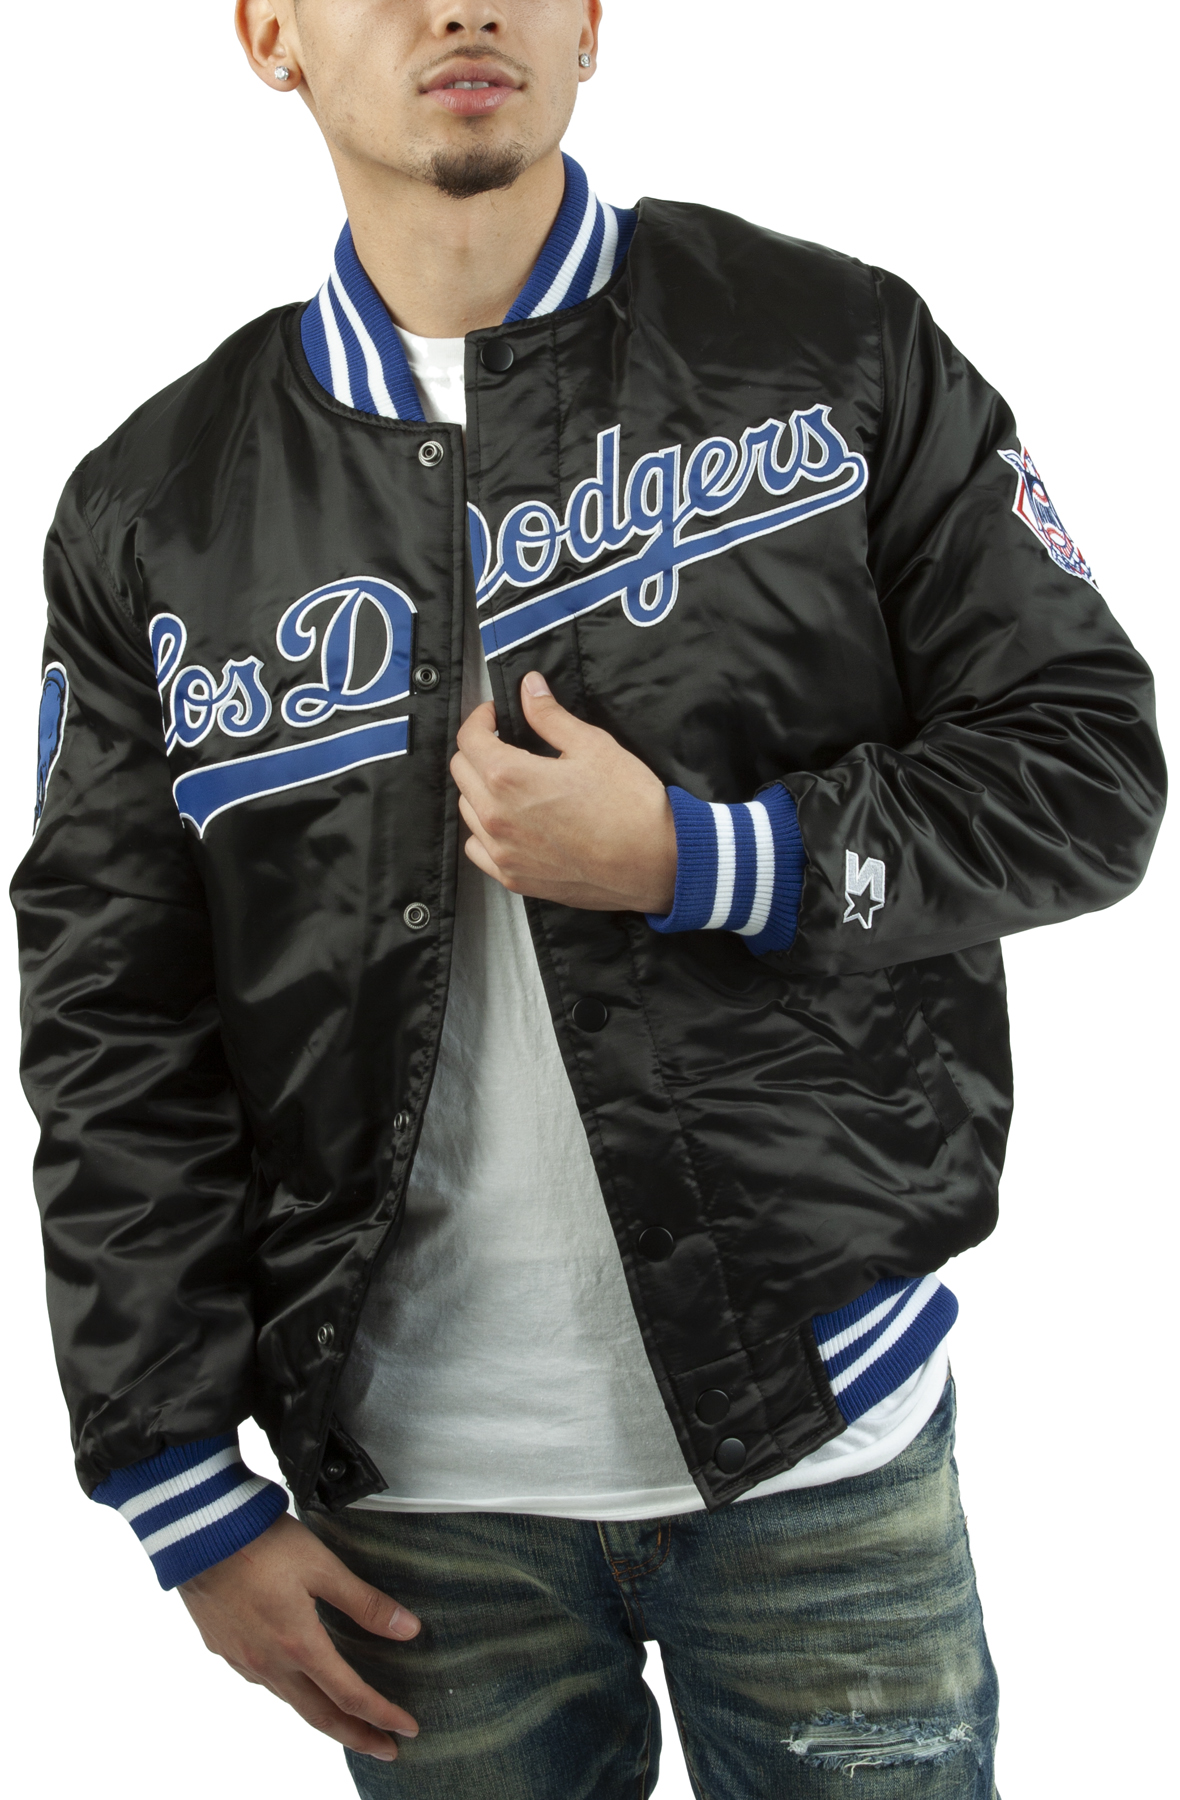 Dodgers Denim Jacket 